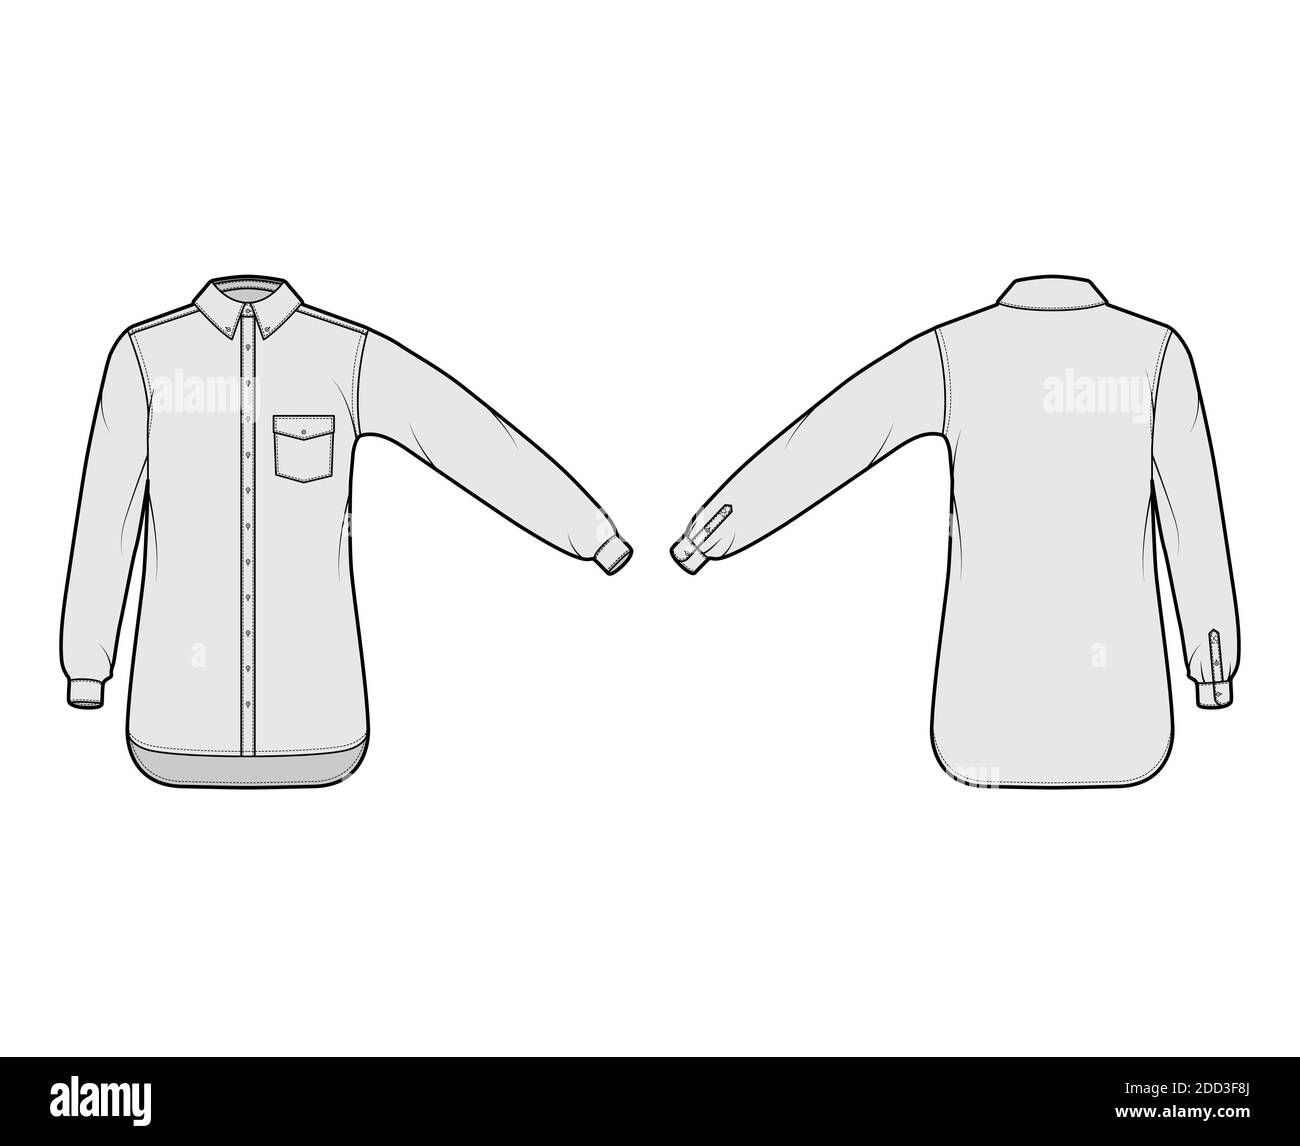 Classic shirt technical fashion illustration with angled pocket ...